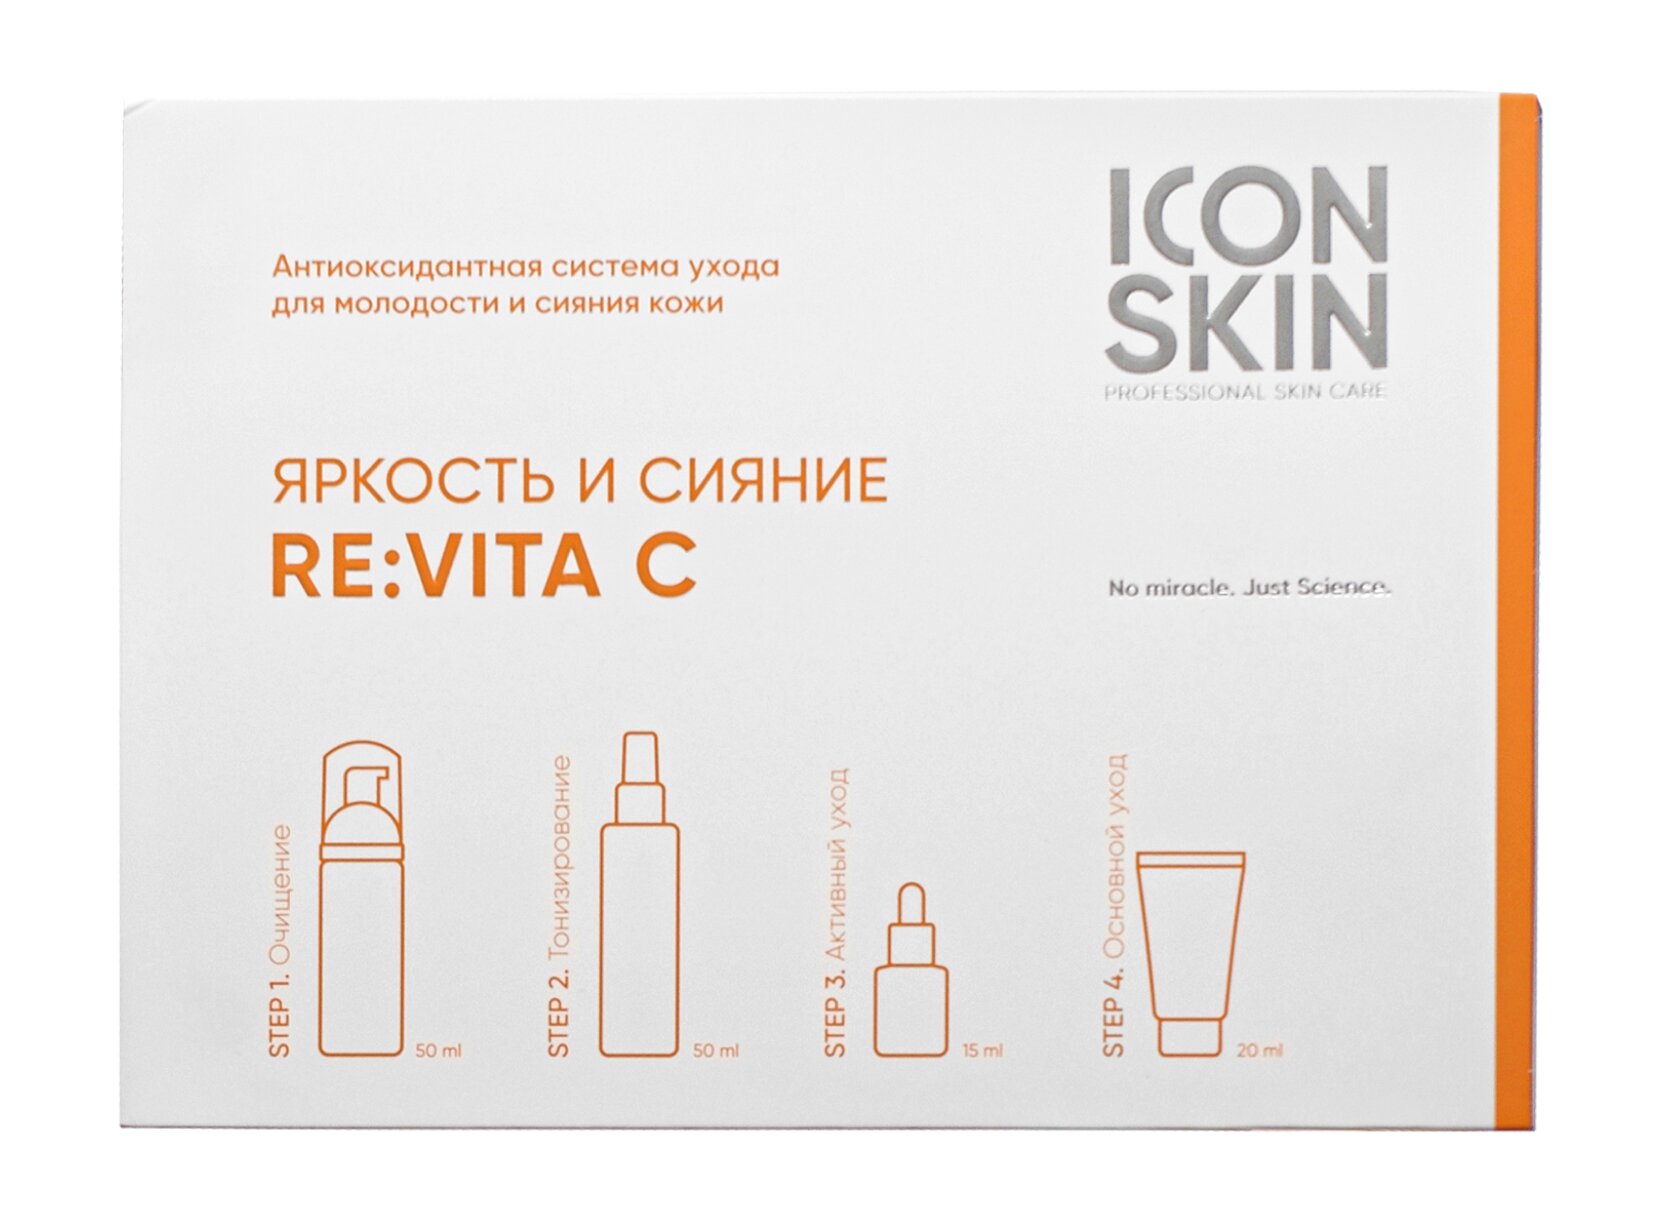 ICON SKIN Набор для ухода за кожей лица Re: Vita C, travel size (4 элемента)